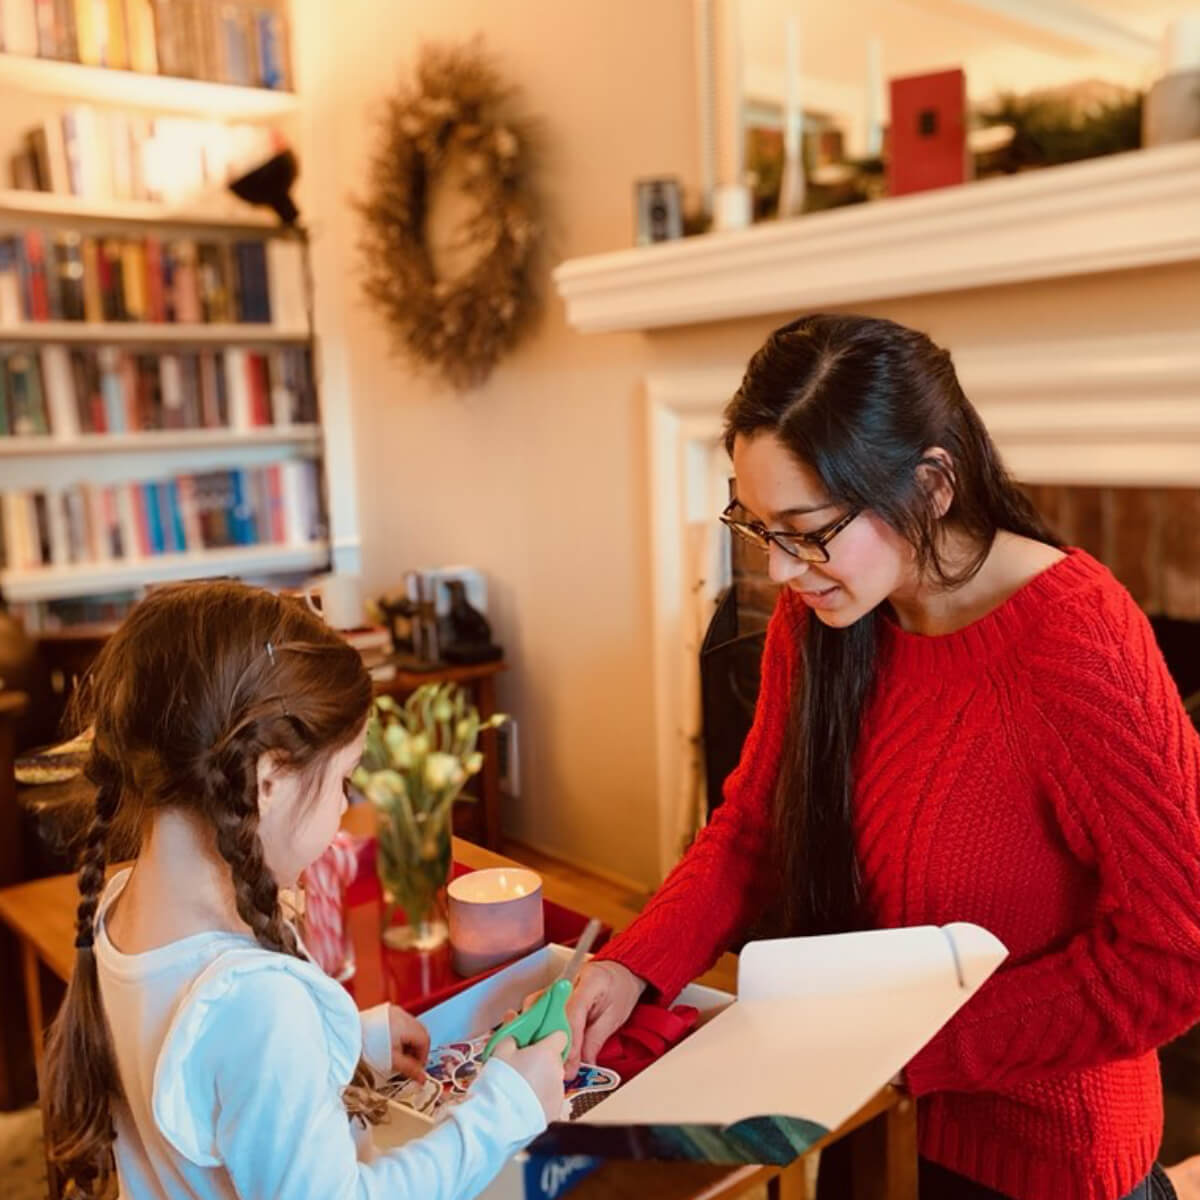 Good News of Great Joy: Family Advent Calendar and Readings